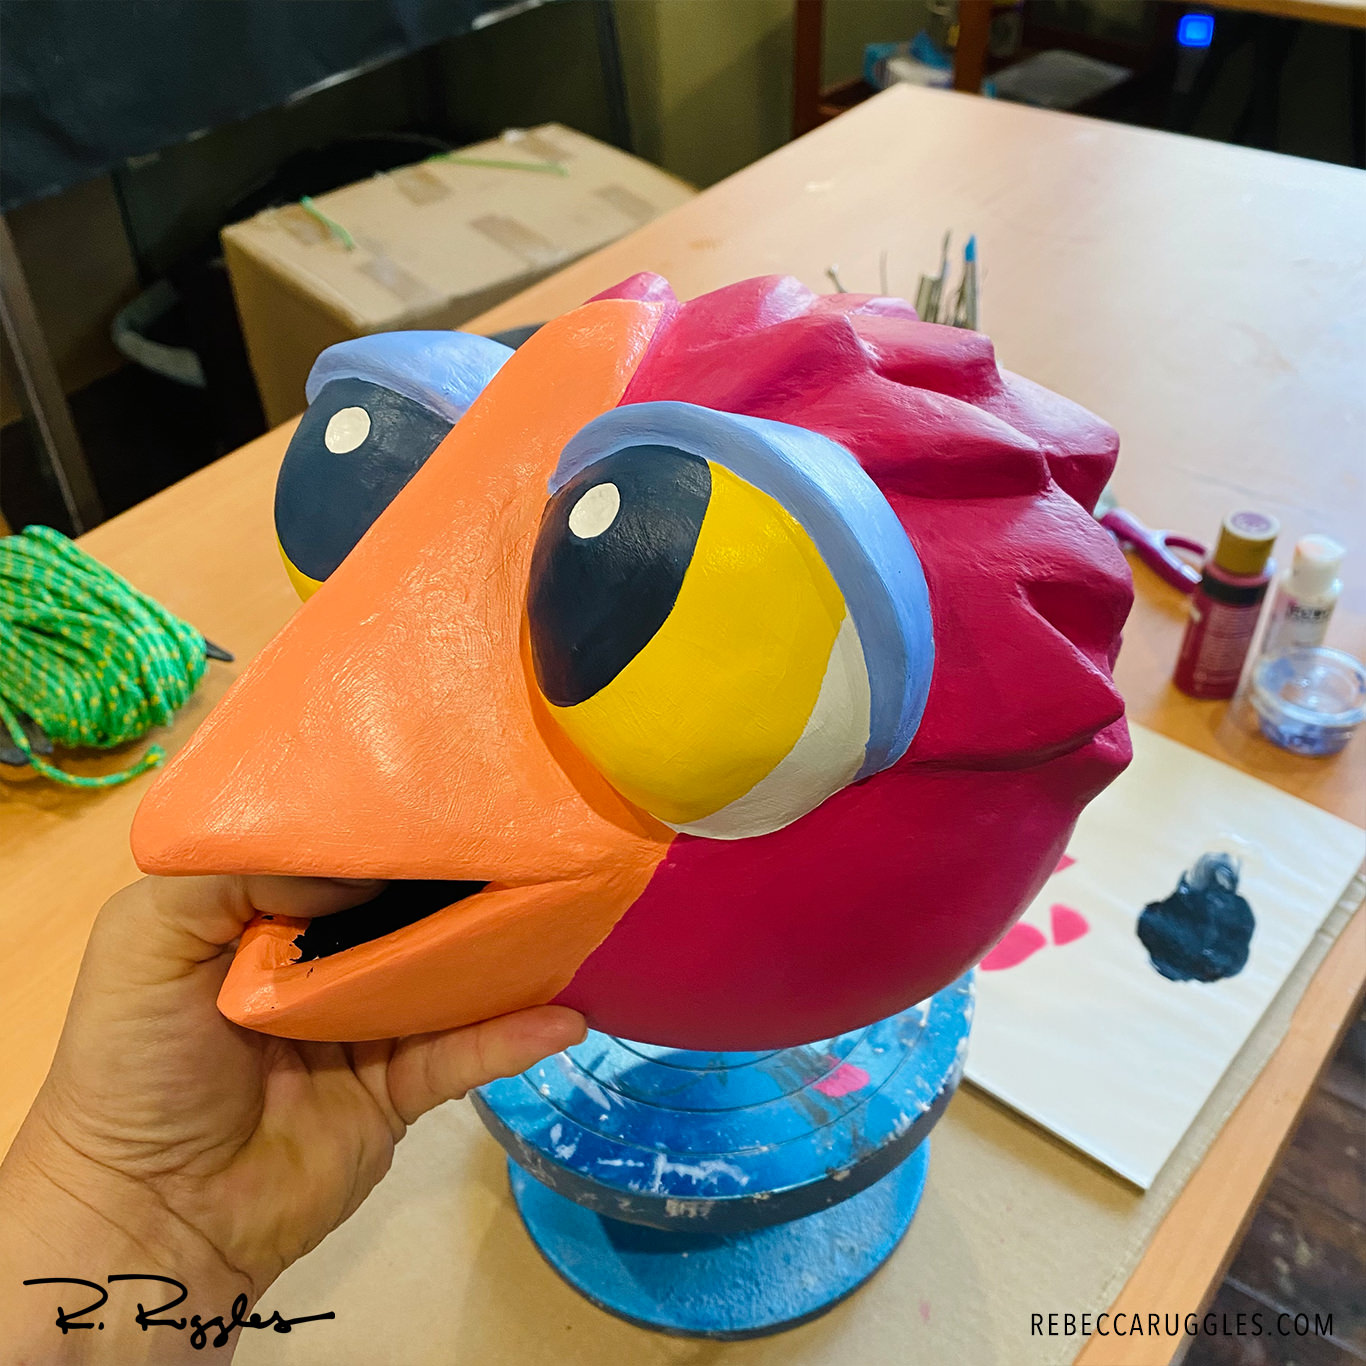 Painted bird head